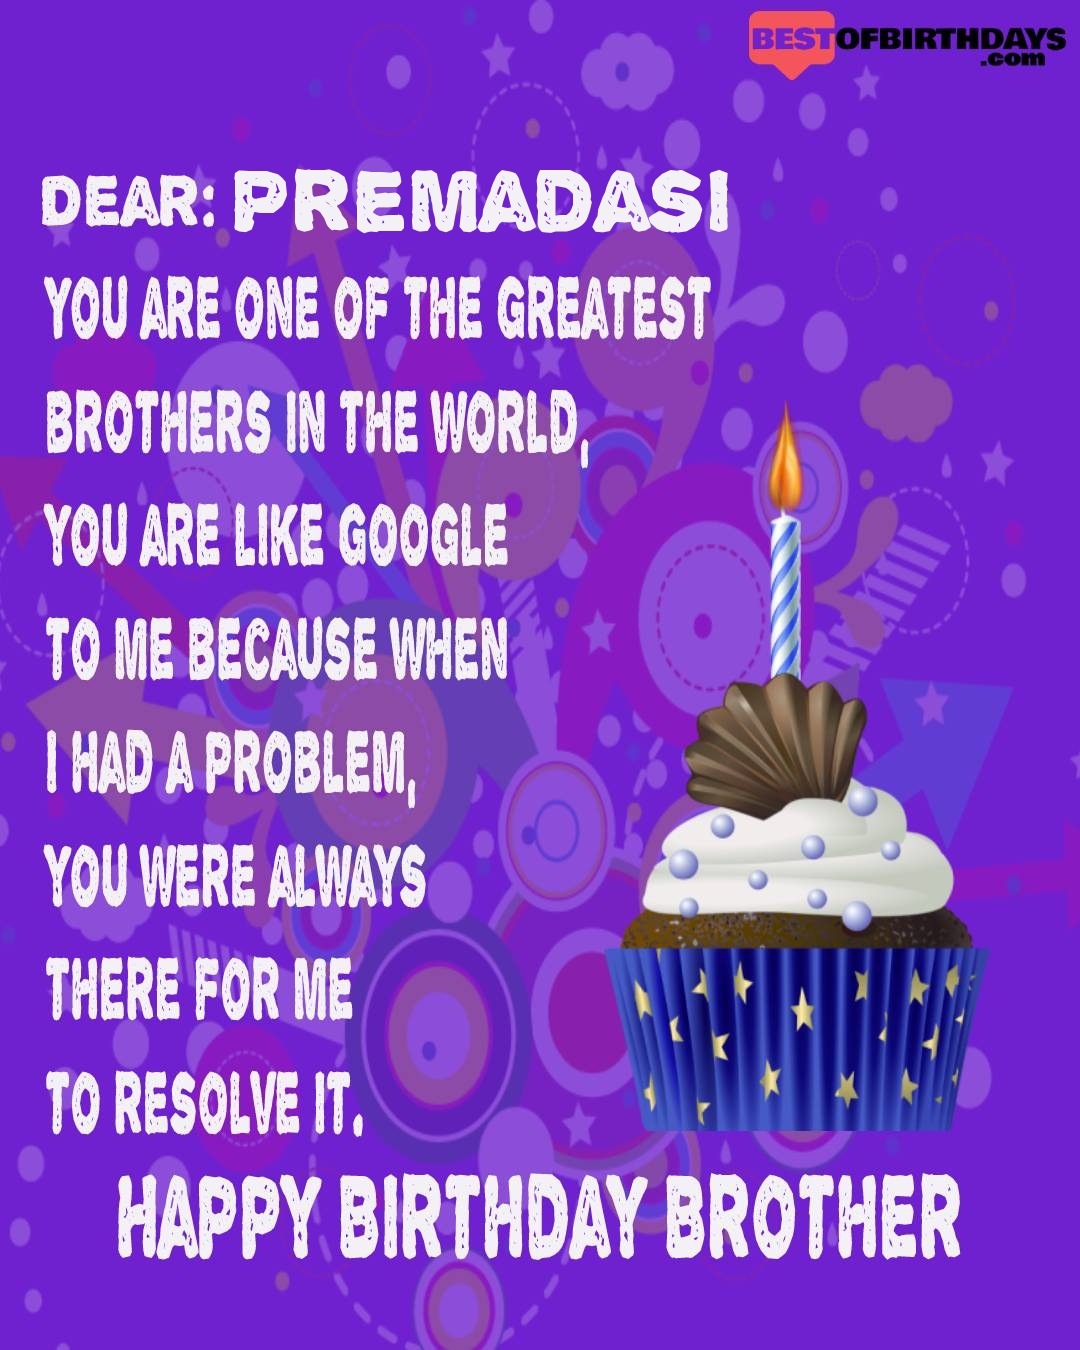 Happy birthday premadasi bhai brother bro